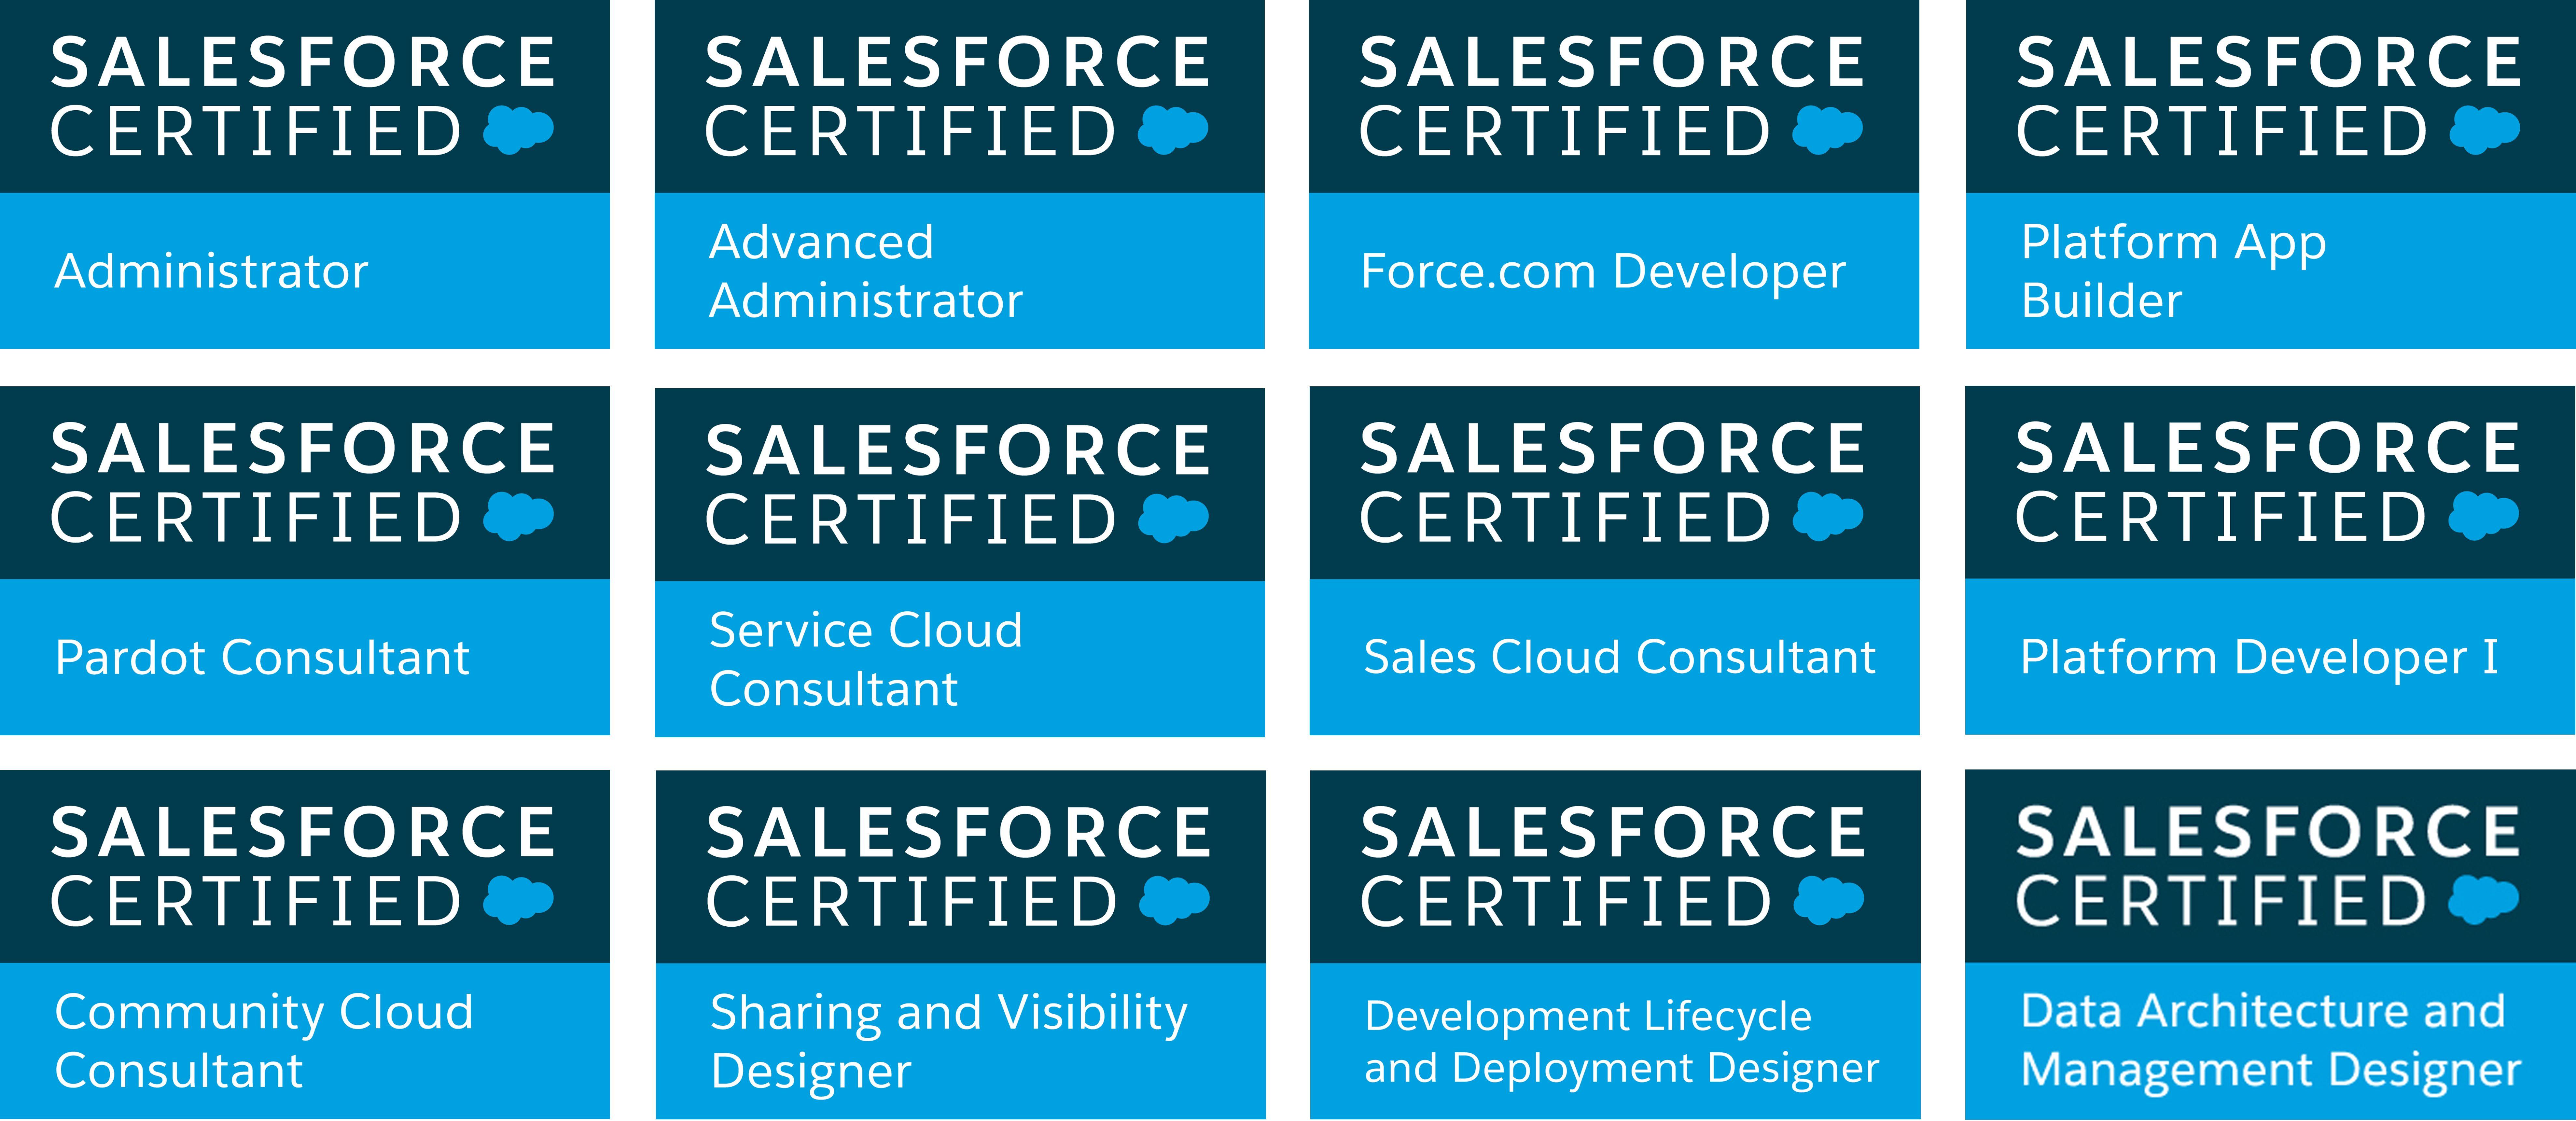 Salesforce Admin Logo - Salesforce app builder Logos